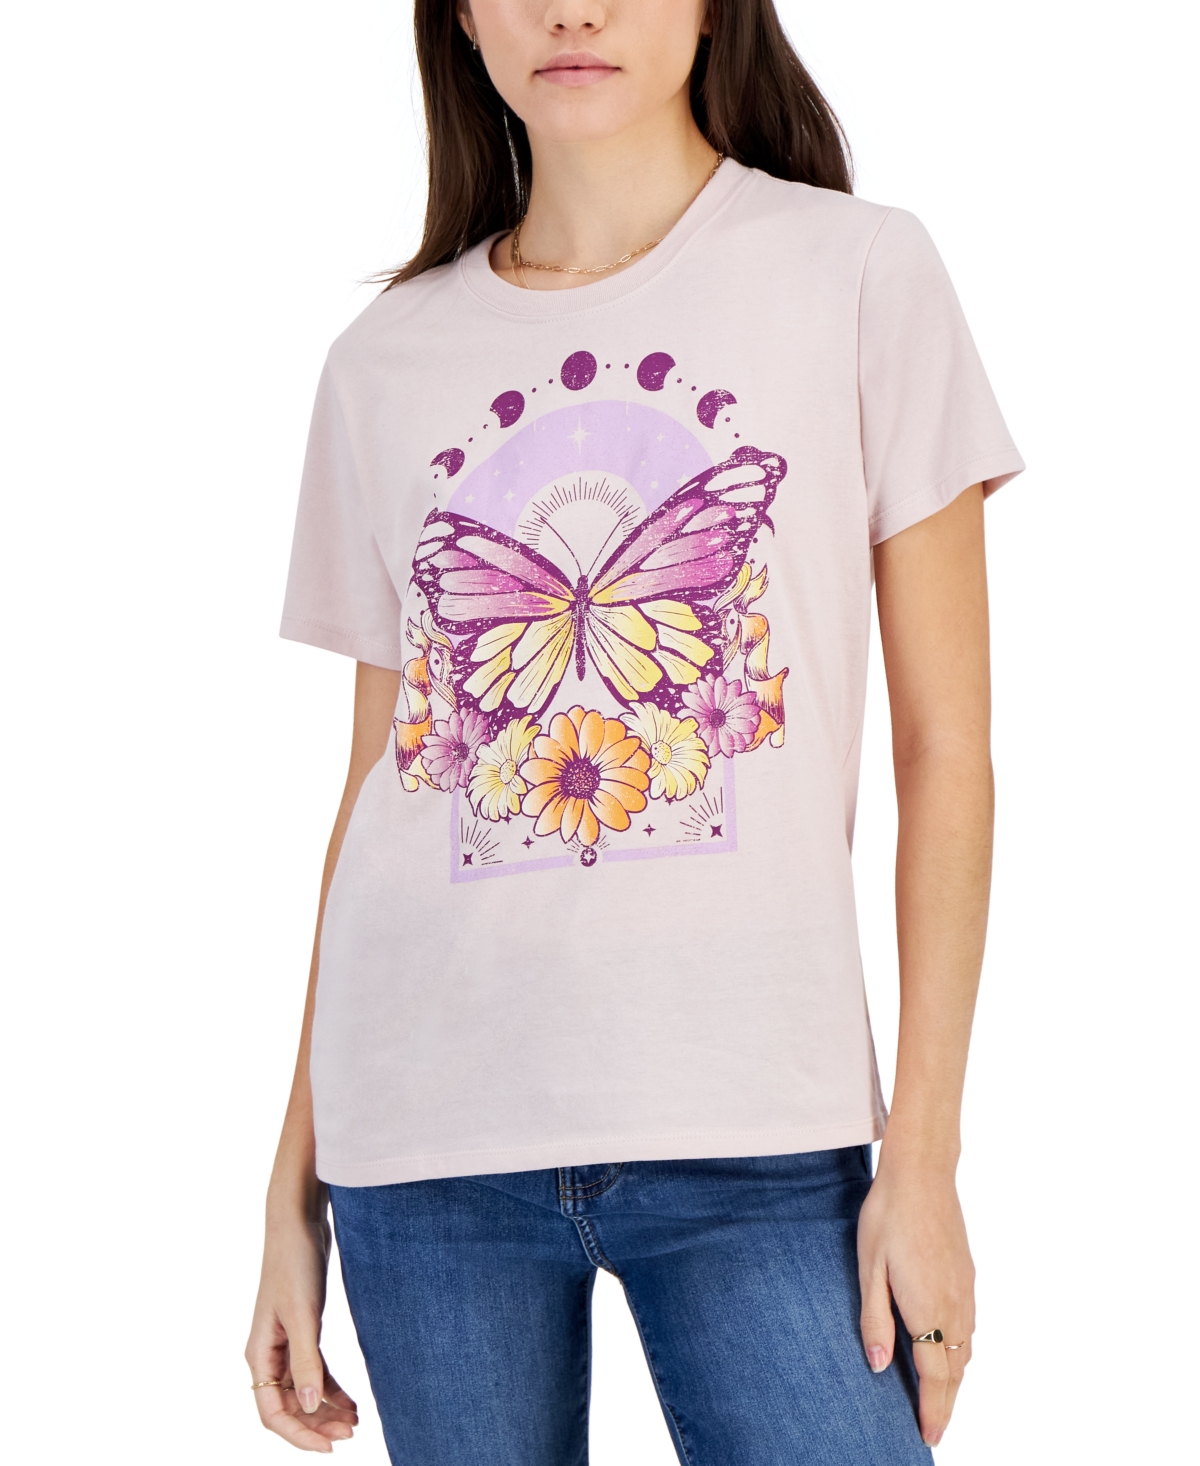 Juniors' Butterfly Floral Crewneck Graphic T-Shirt - Hushed Violet